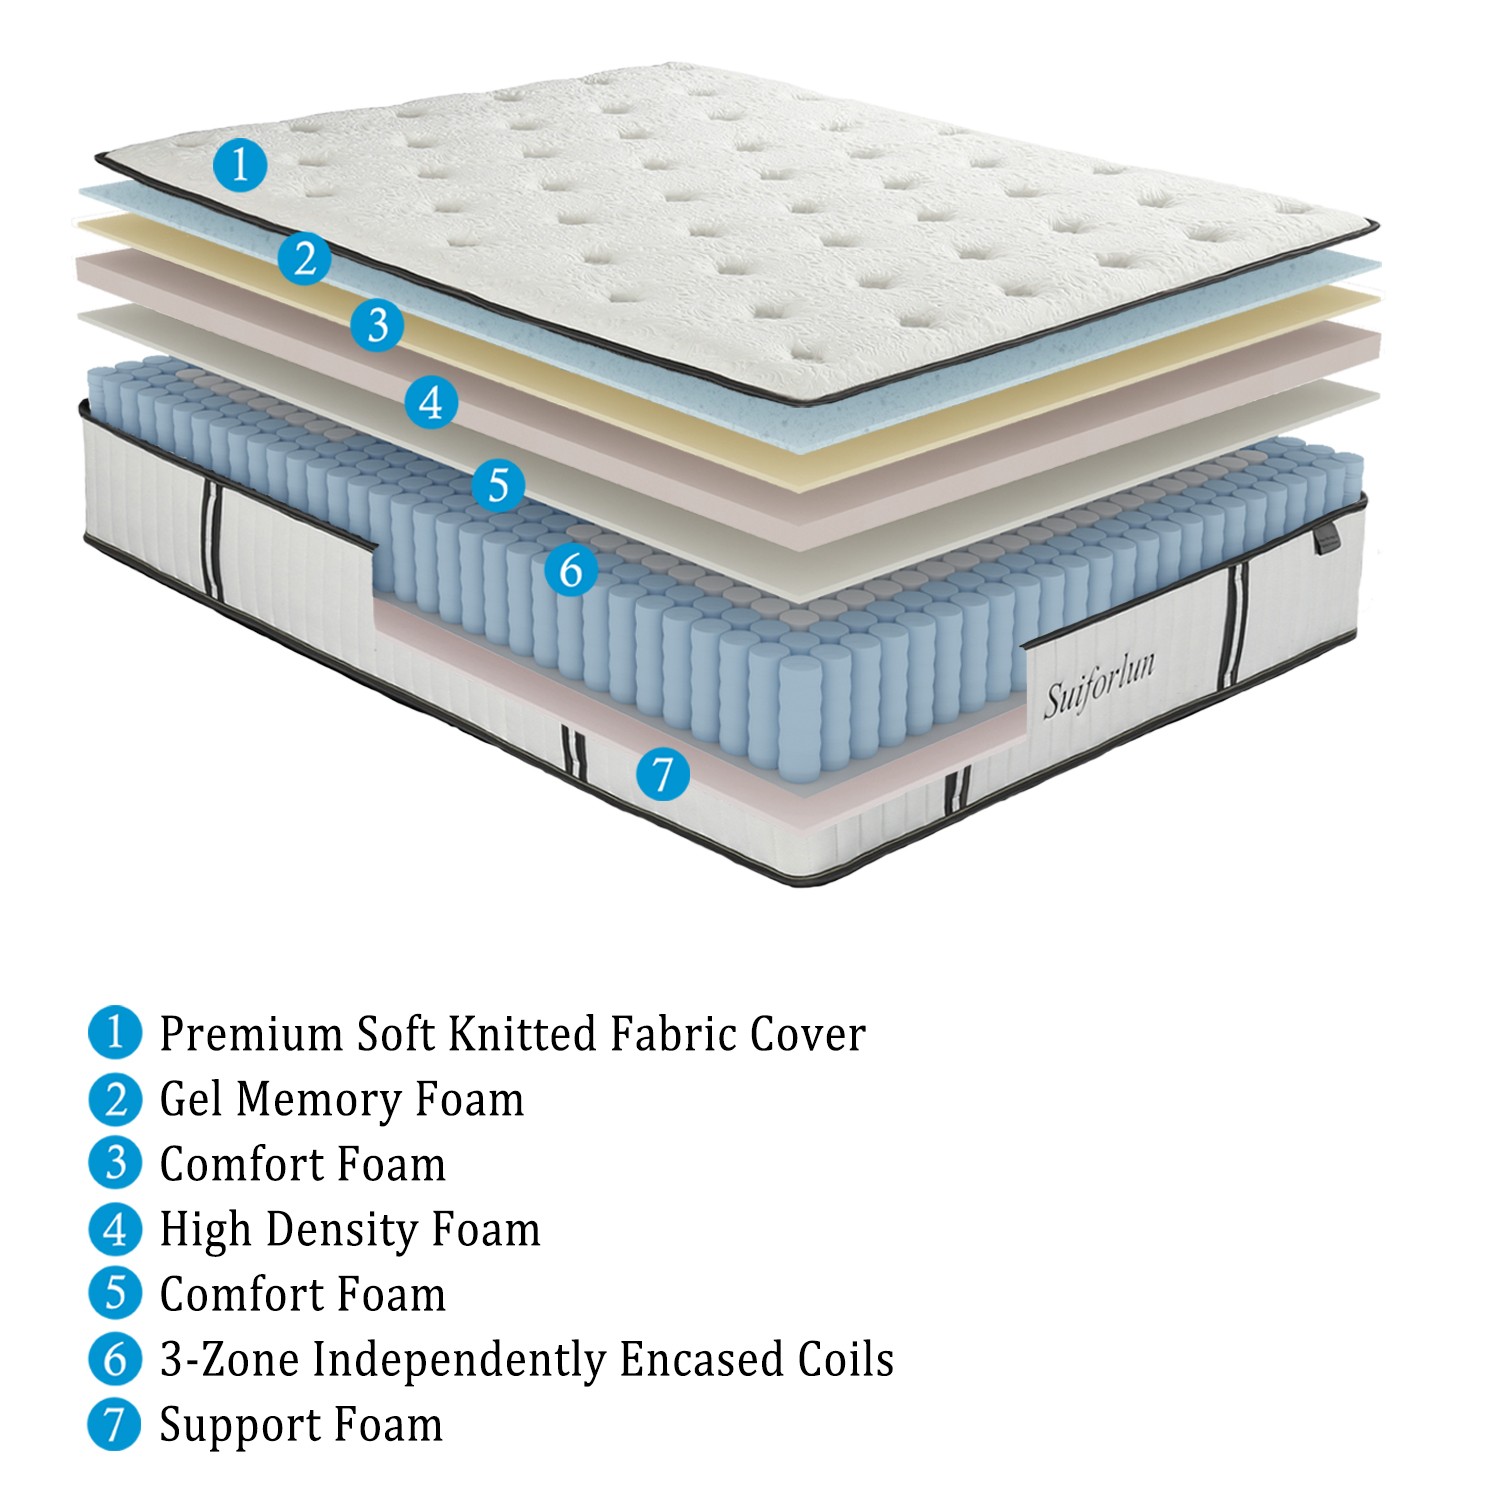 Suiforlun mattress hybrid mattress king trade partner-2